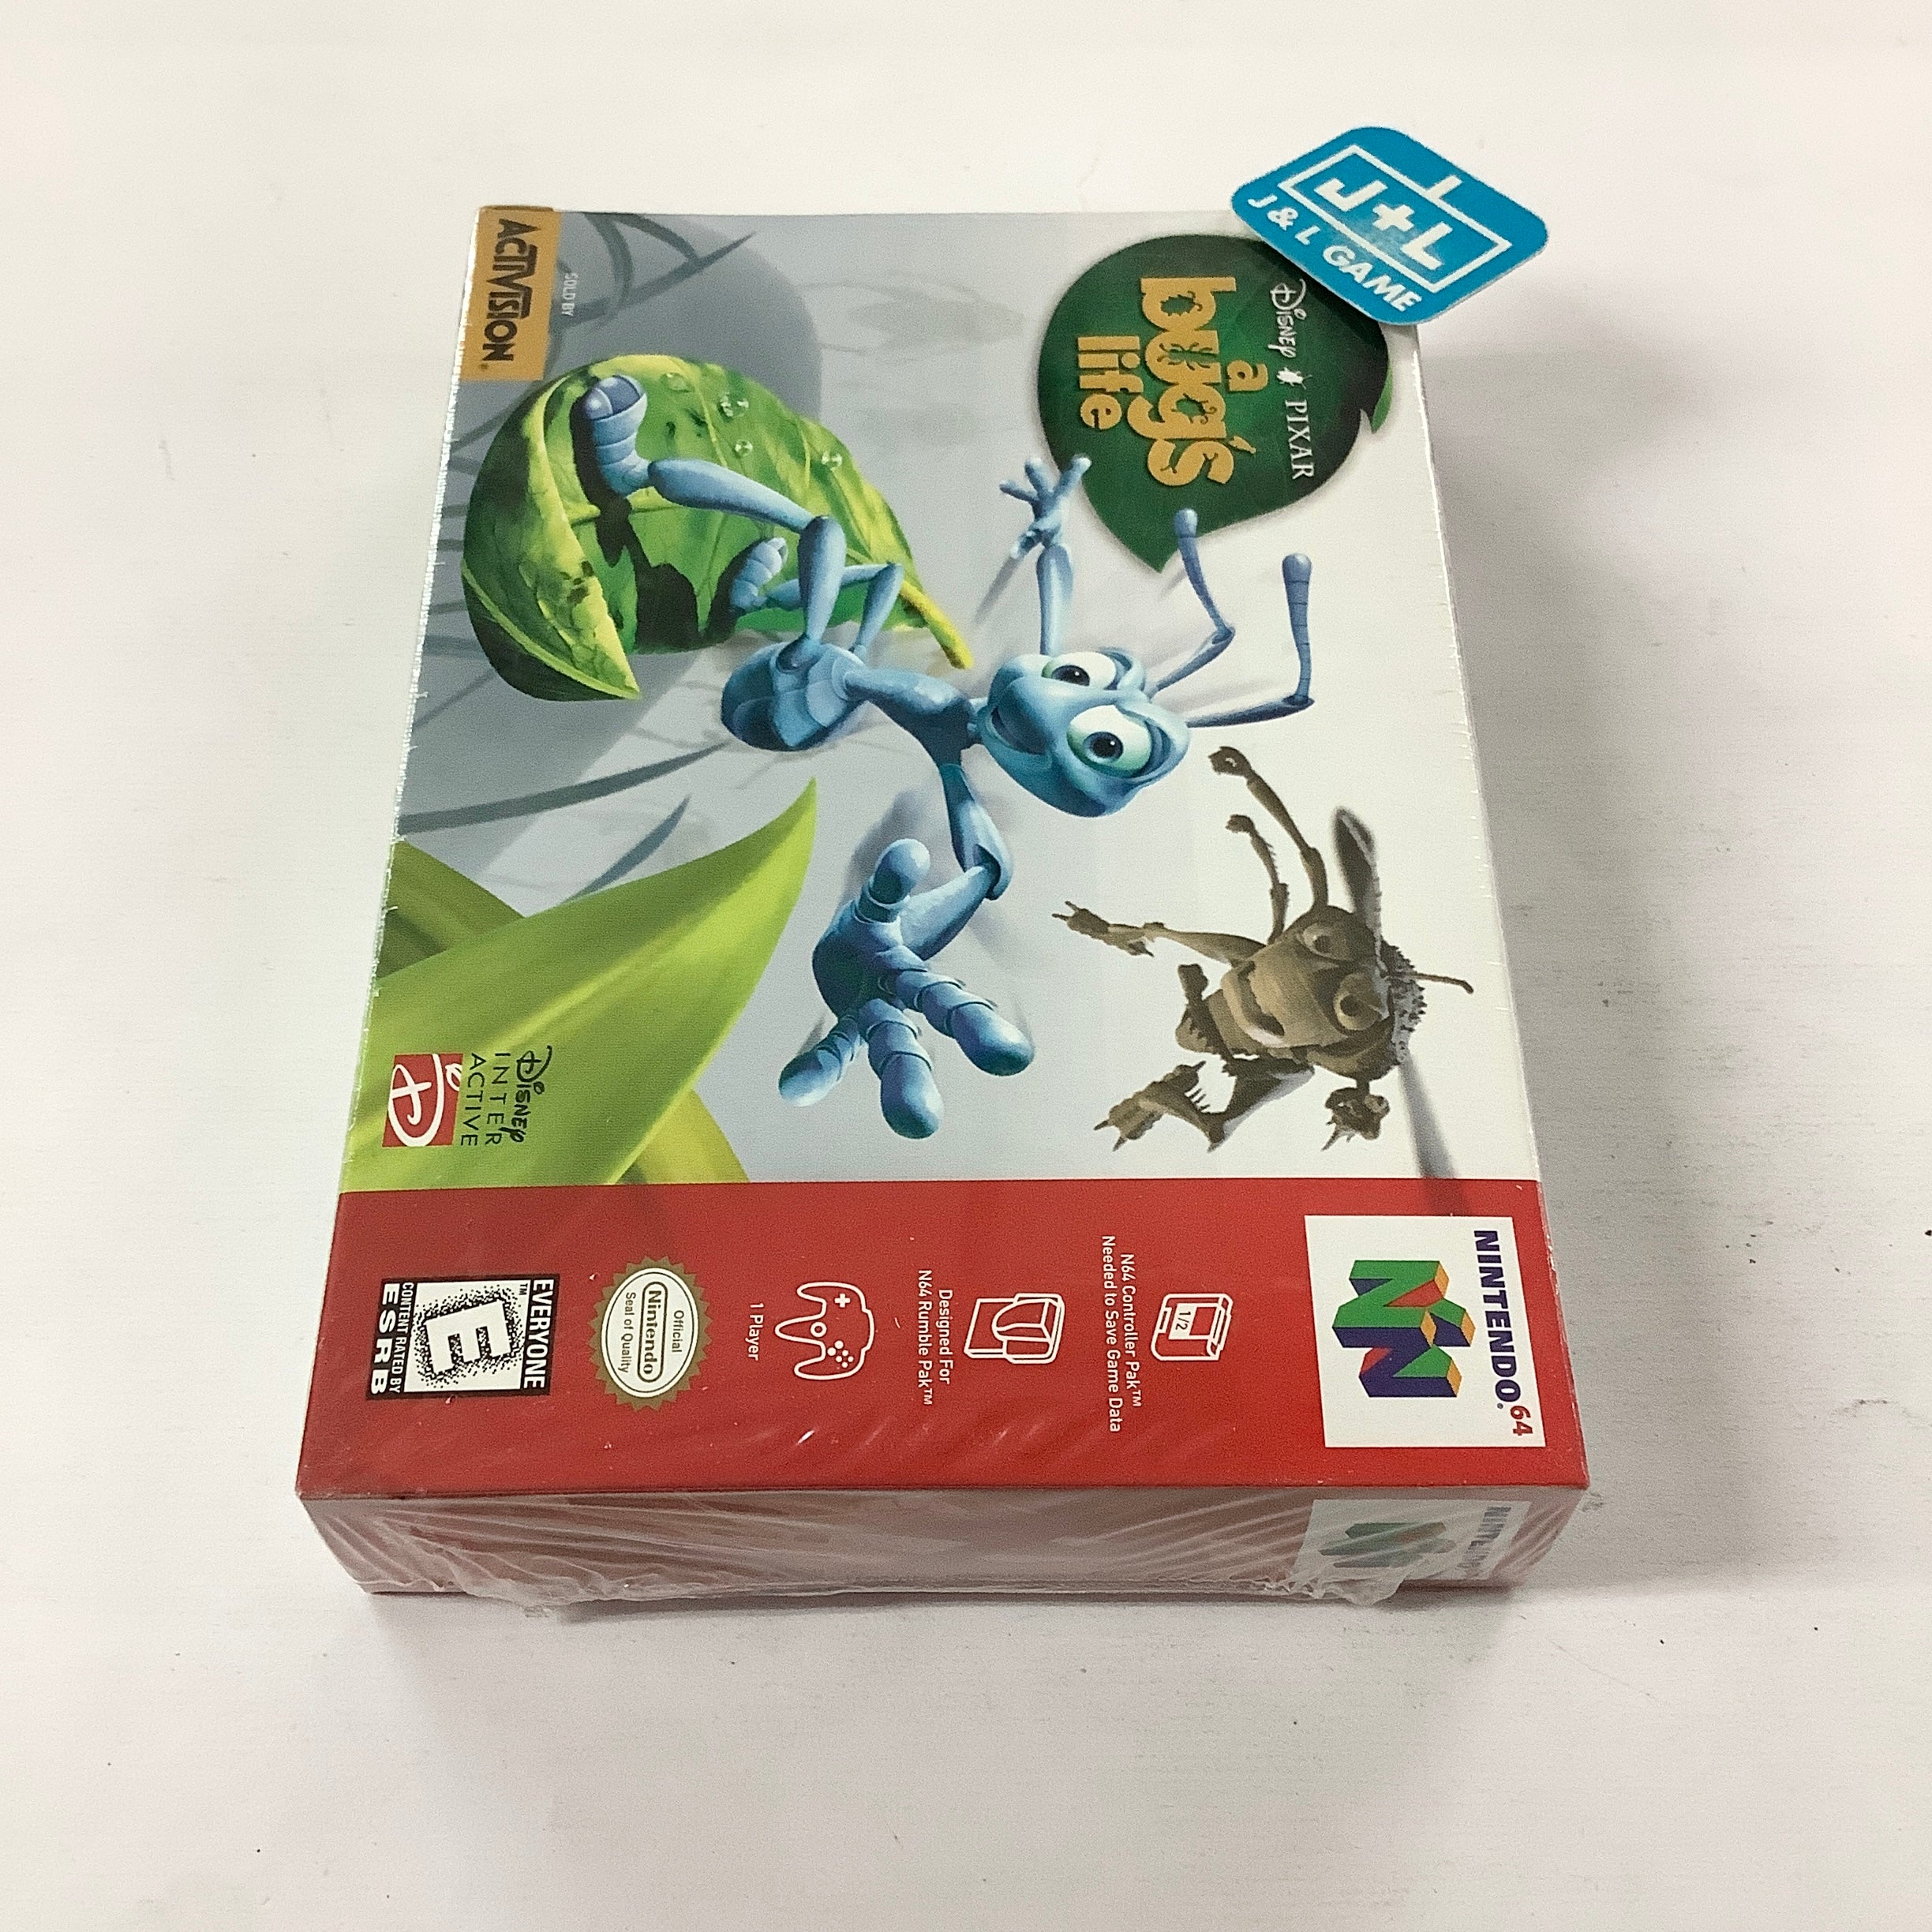 A Bug's Life - (N64) Nintendo 64 Video Games Activision   